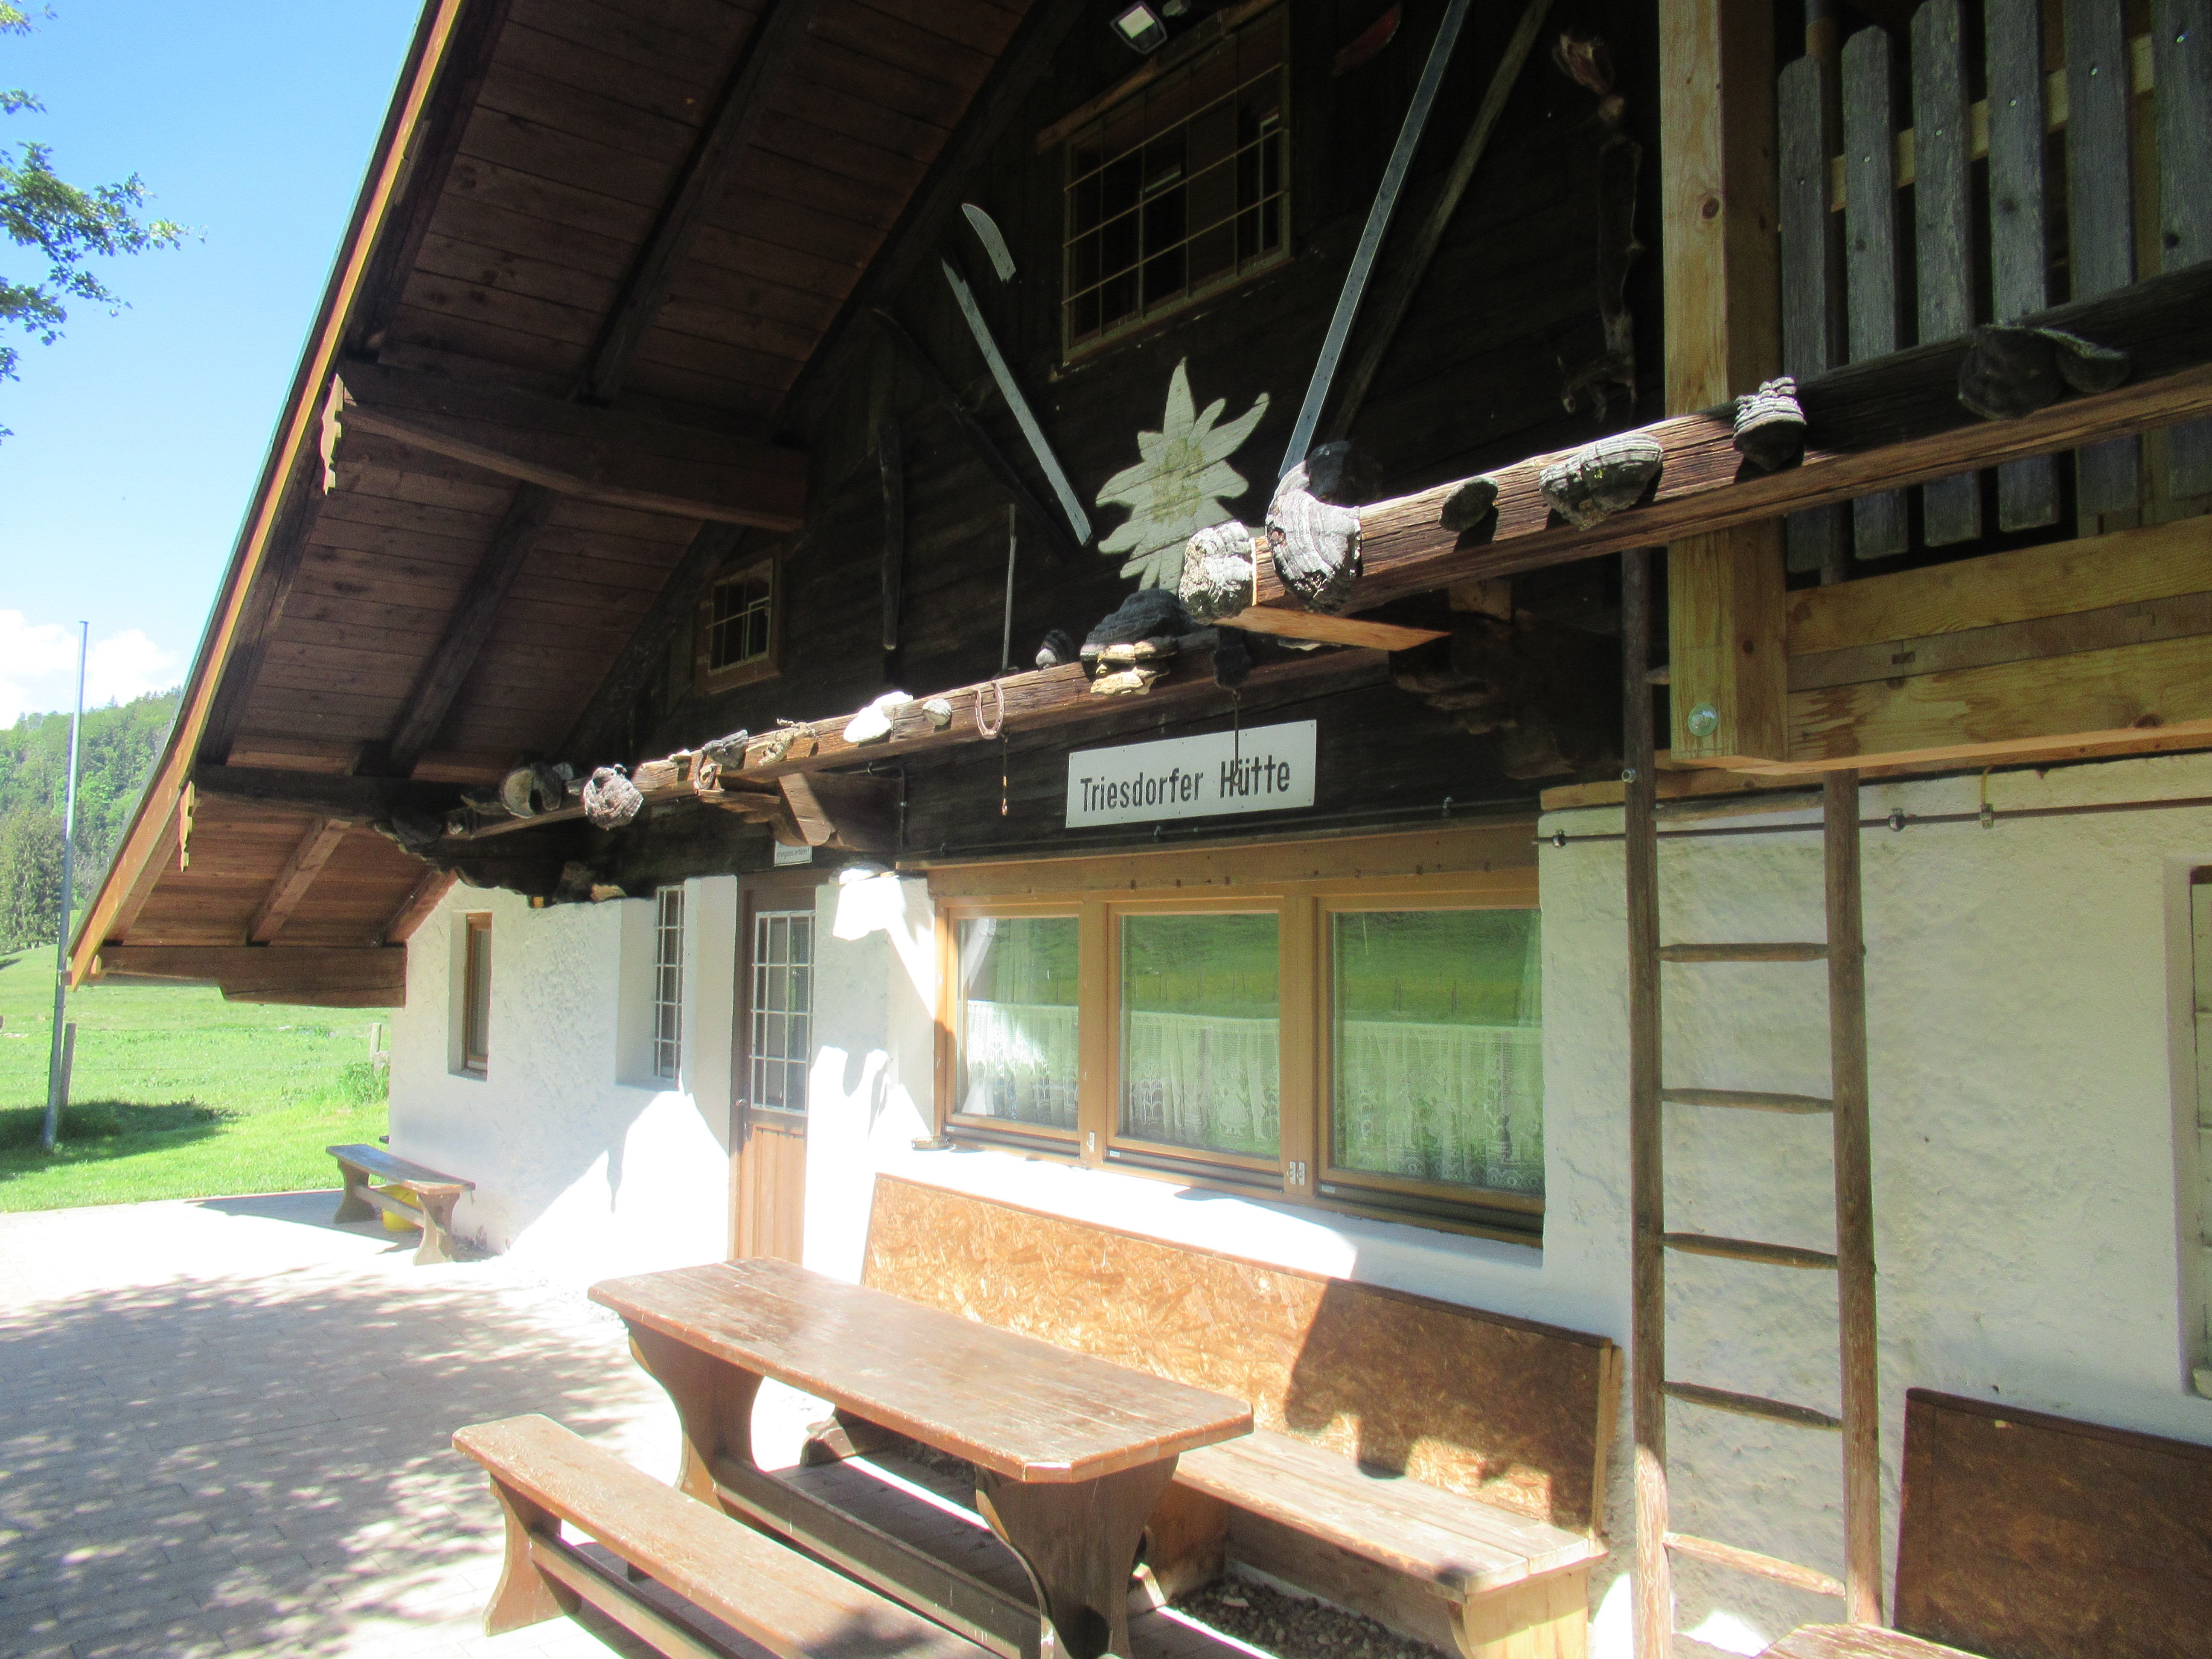 die Triesdorferhütte